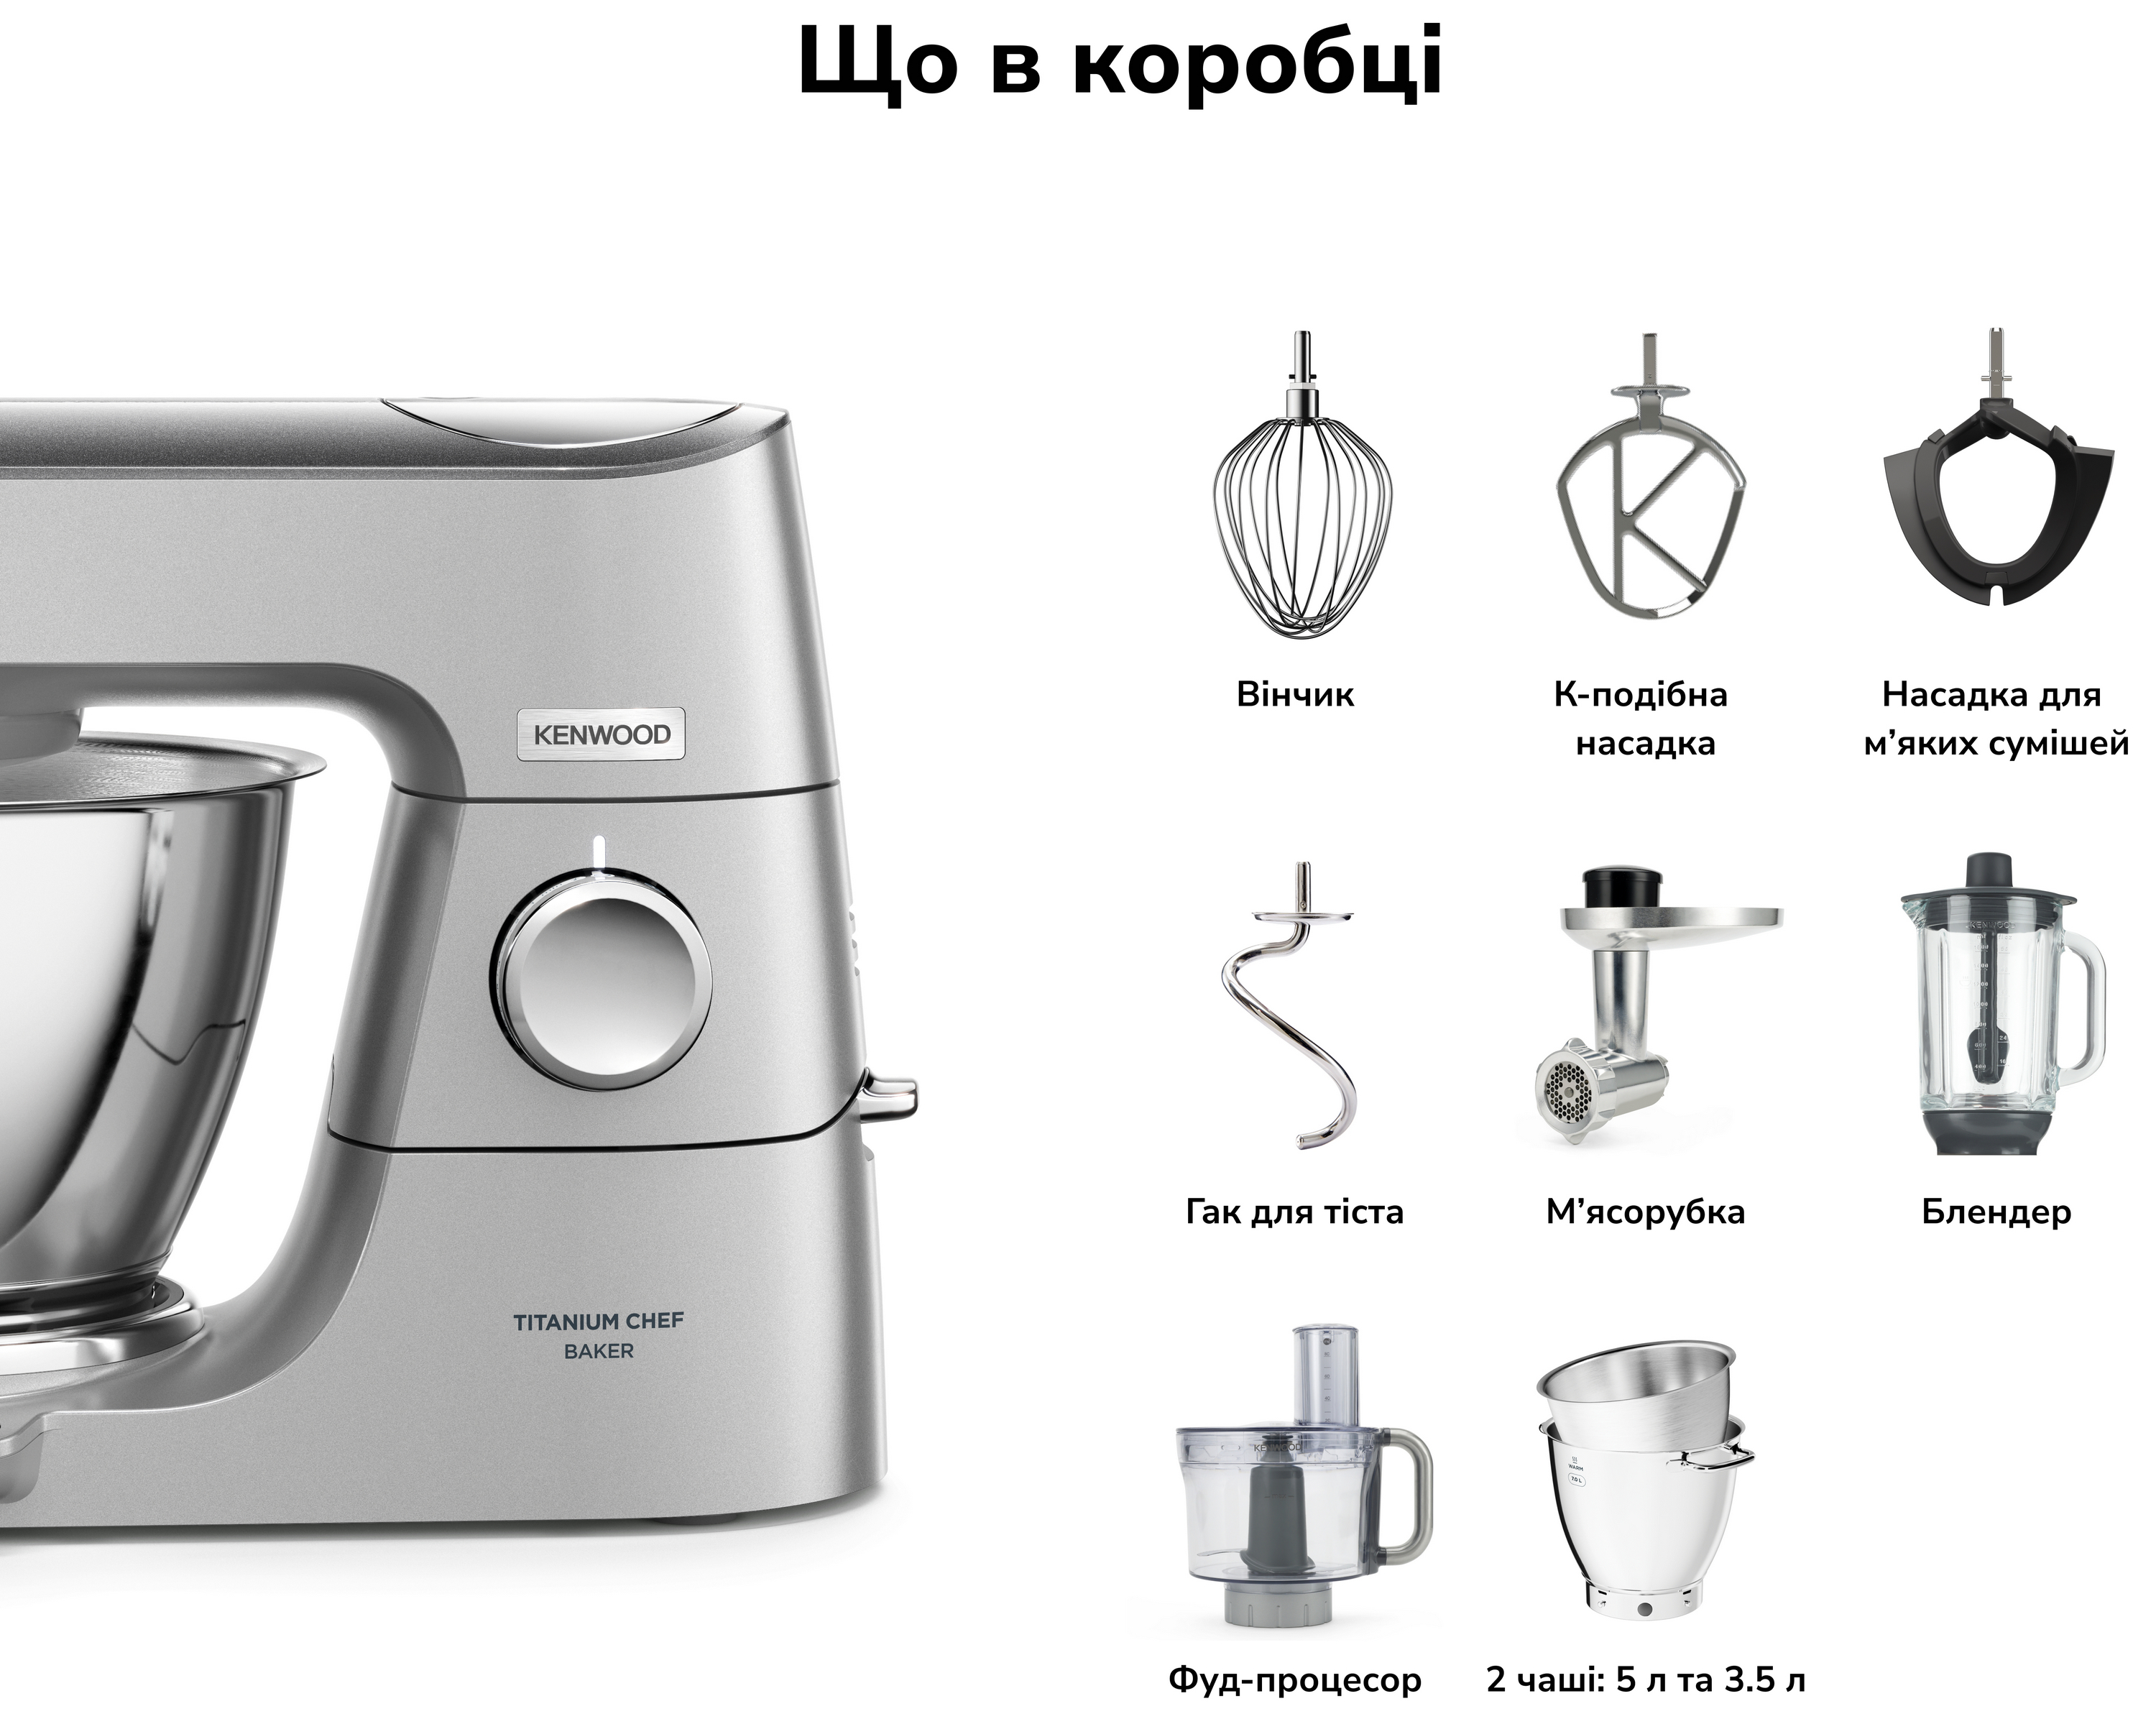 Кухонная машина Kenwood KVC85.594.SI Titanium Chef Baker обзор - фото 11